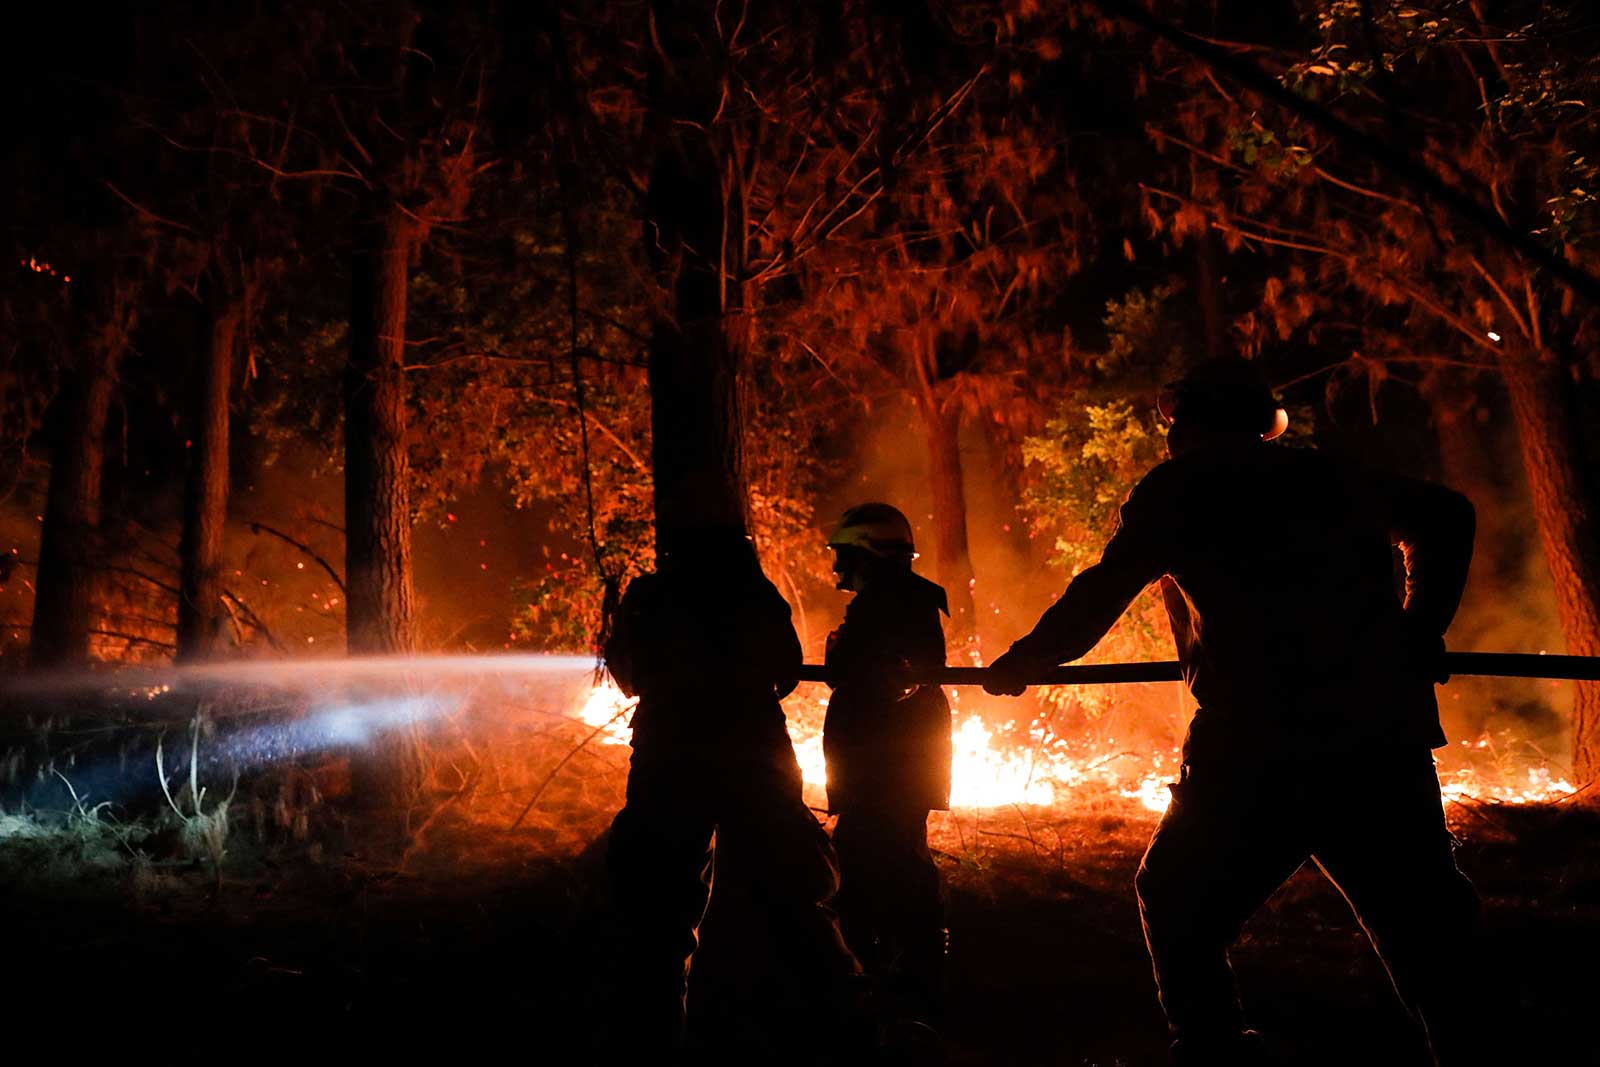 تشيلي تفرض حظر تجوّل ليلياً بسبب الحرائق